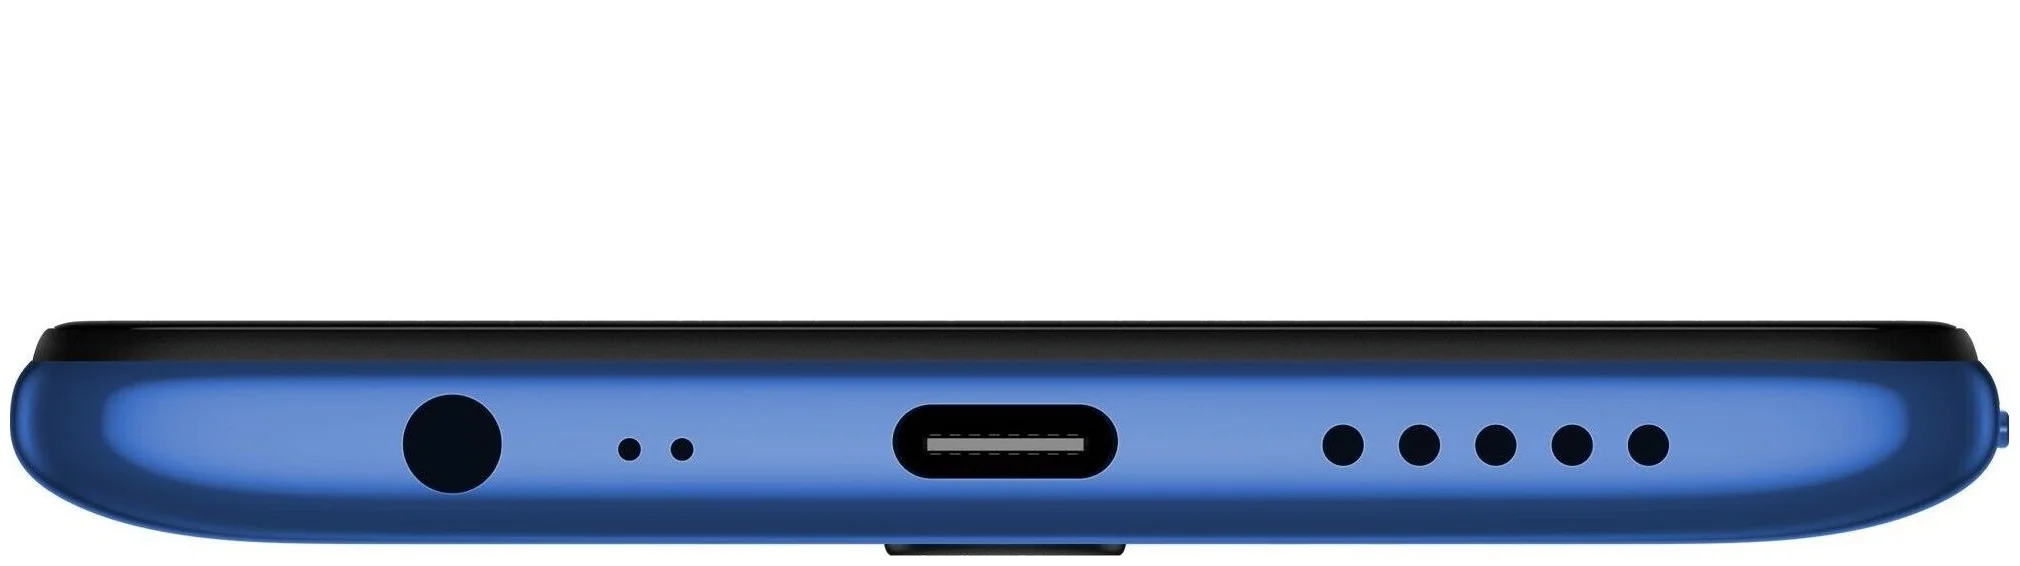 Xiaomi Redmi 8 4/64GB - беспроводные интерфейсы: Wi-Fi, Bluetooth 4.2